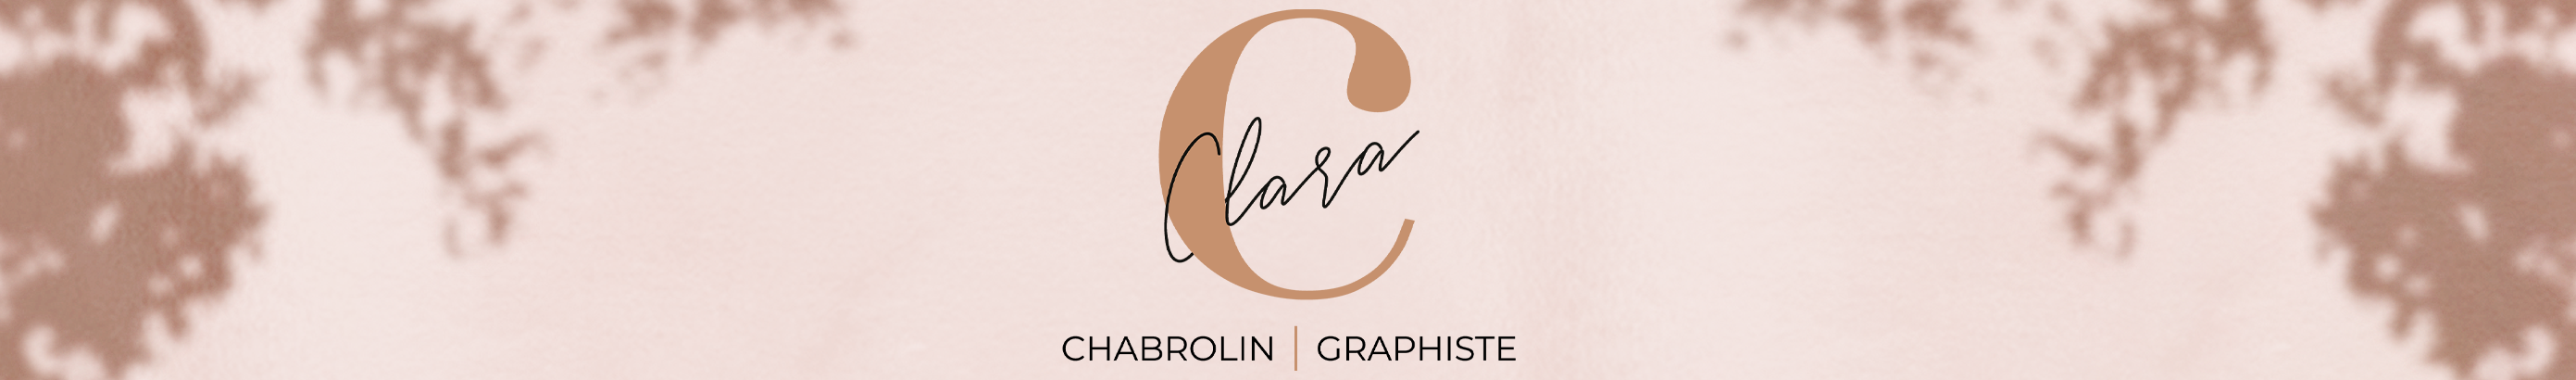 Clara Chabrolin のプロファイルバナー